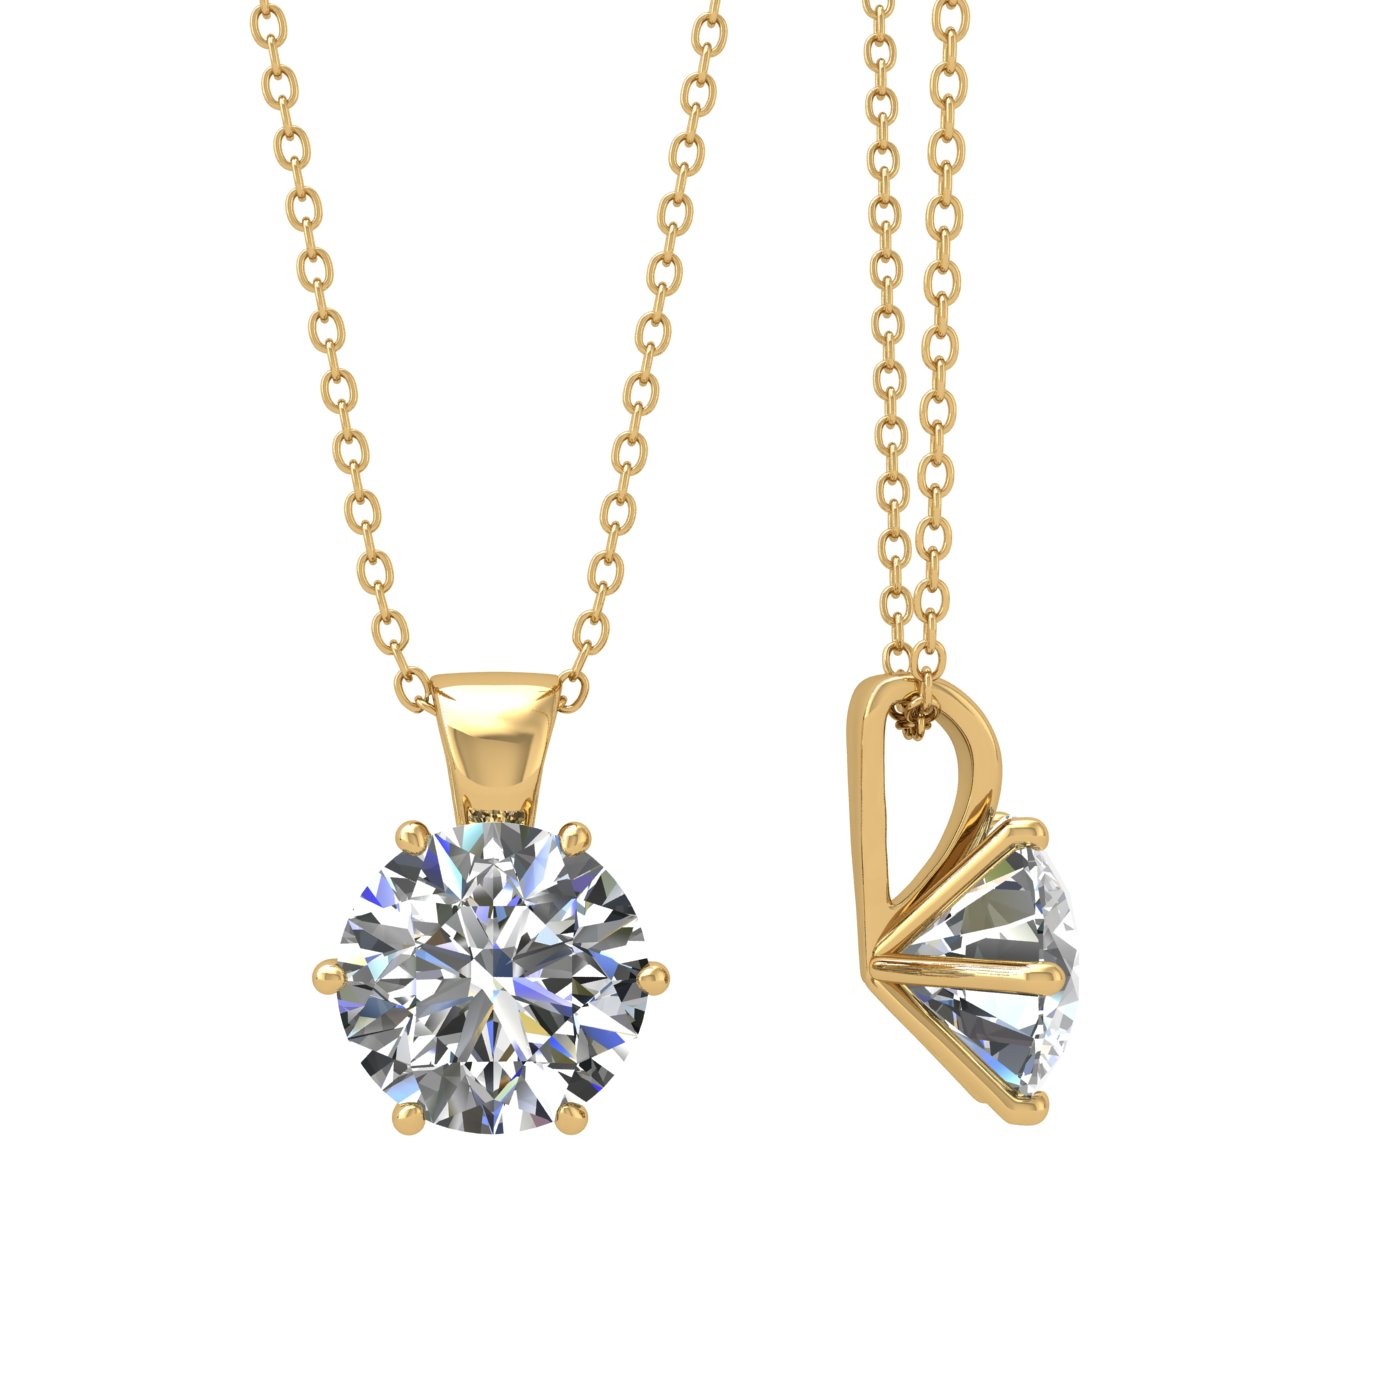 18k yellow gold 2.0 ct 6 prongs round shape diamond pendant